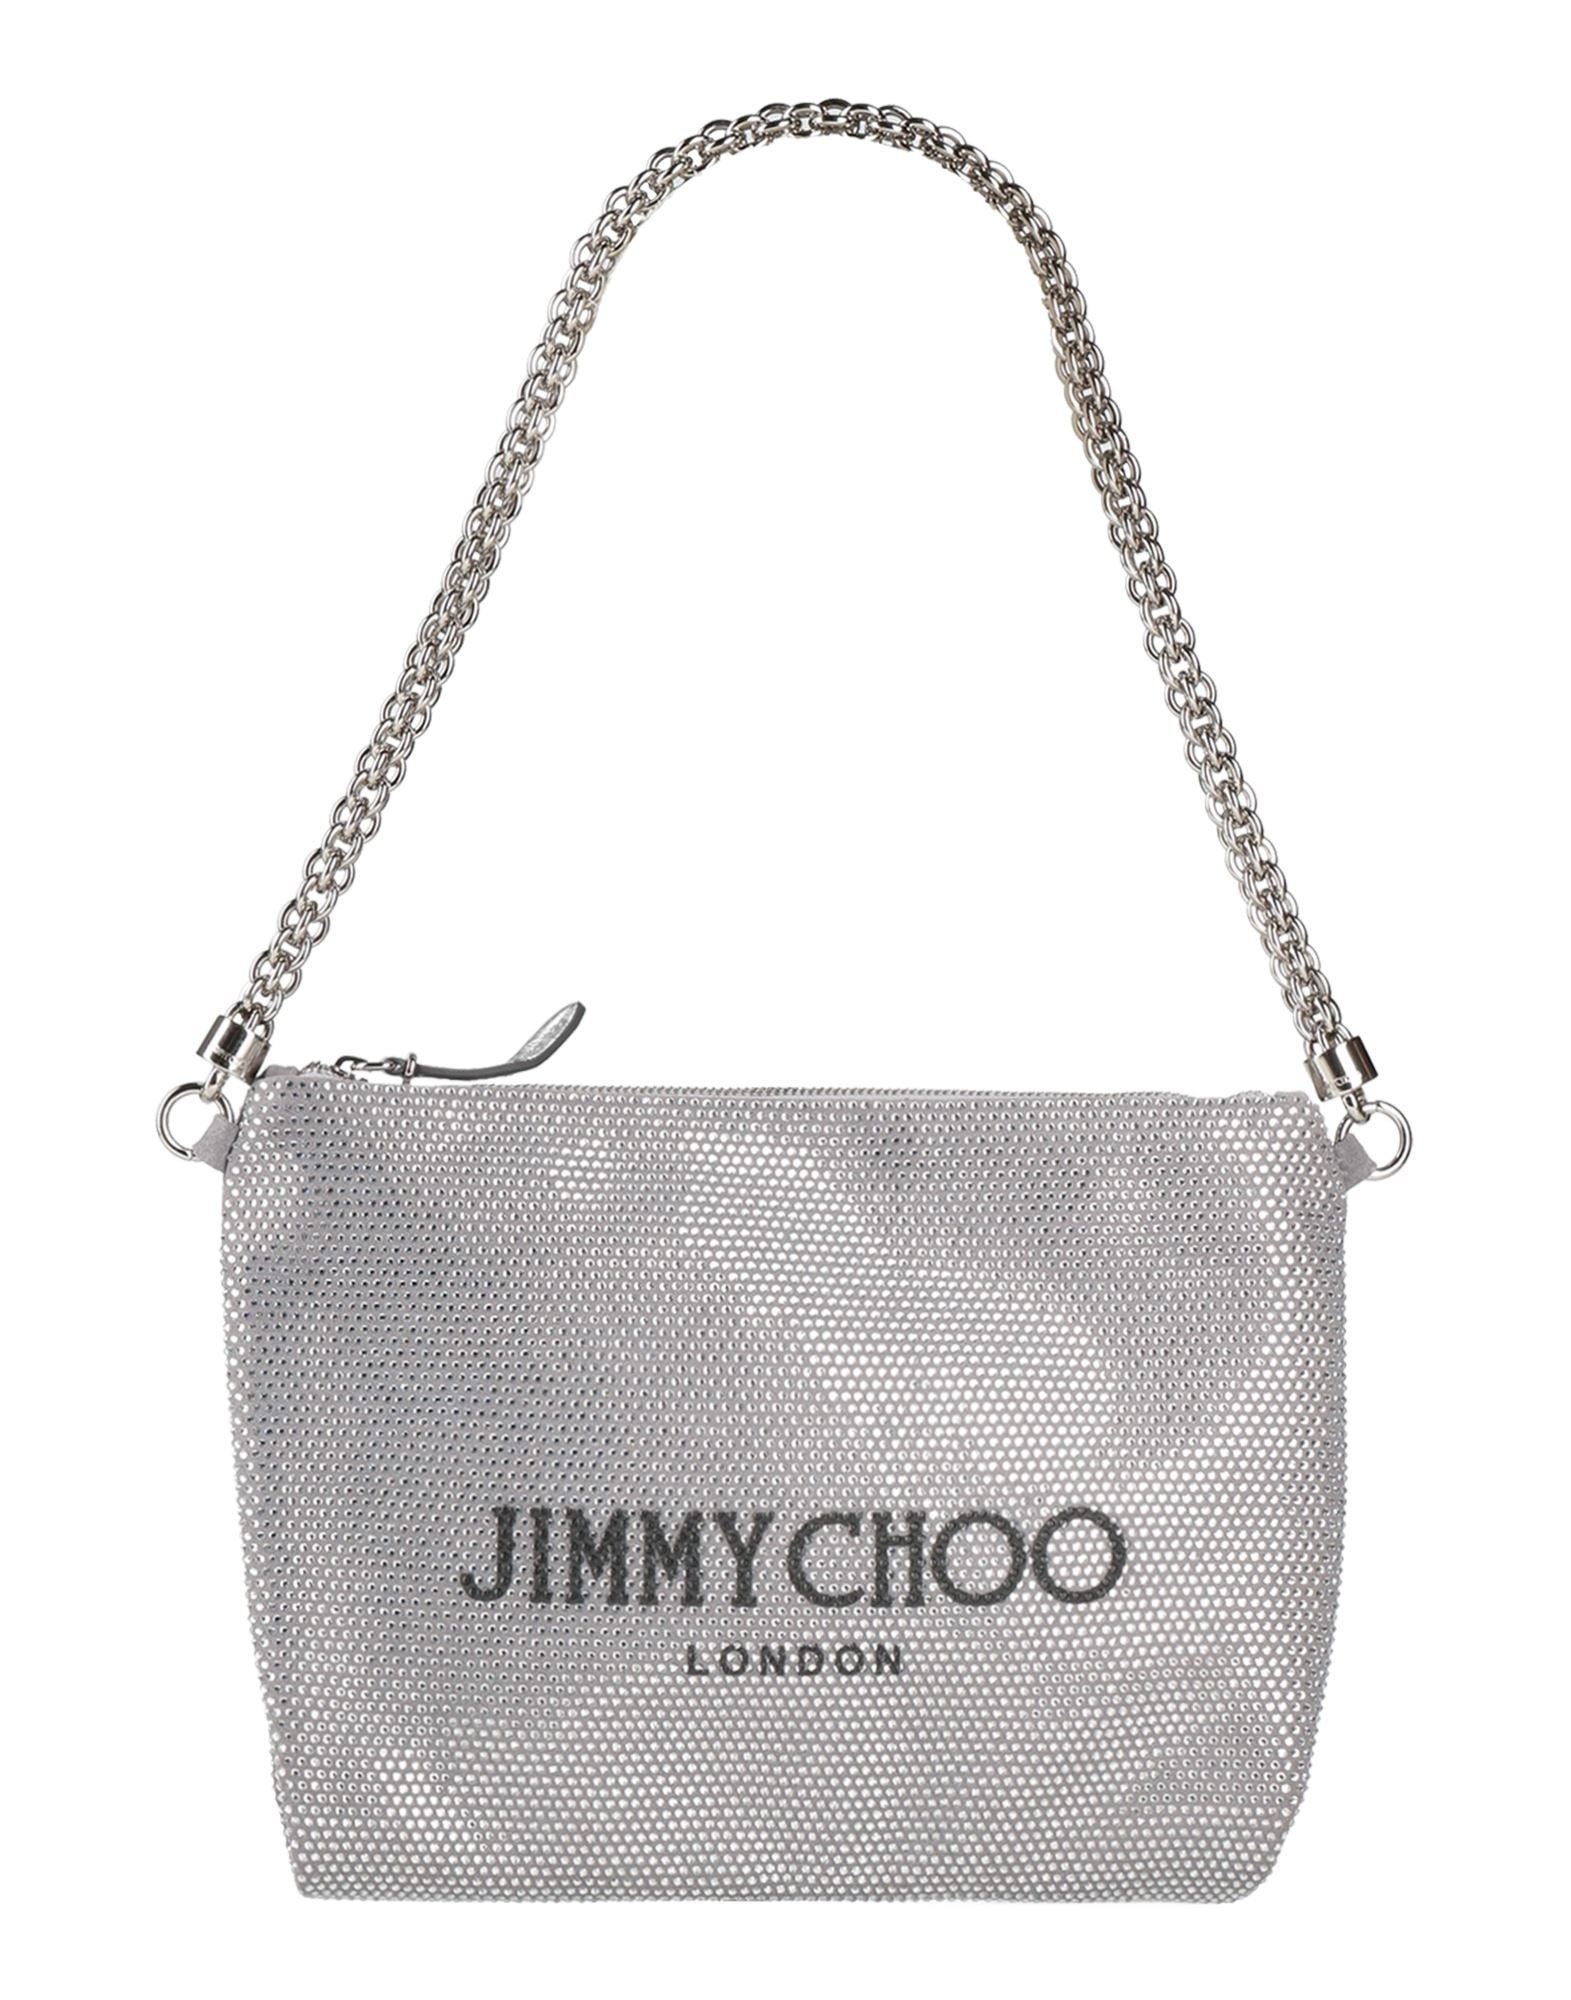 Silver Women's Handbag - 1